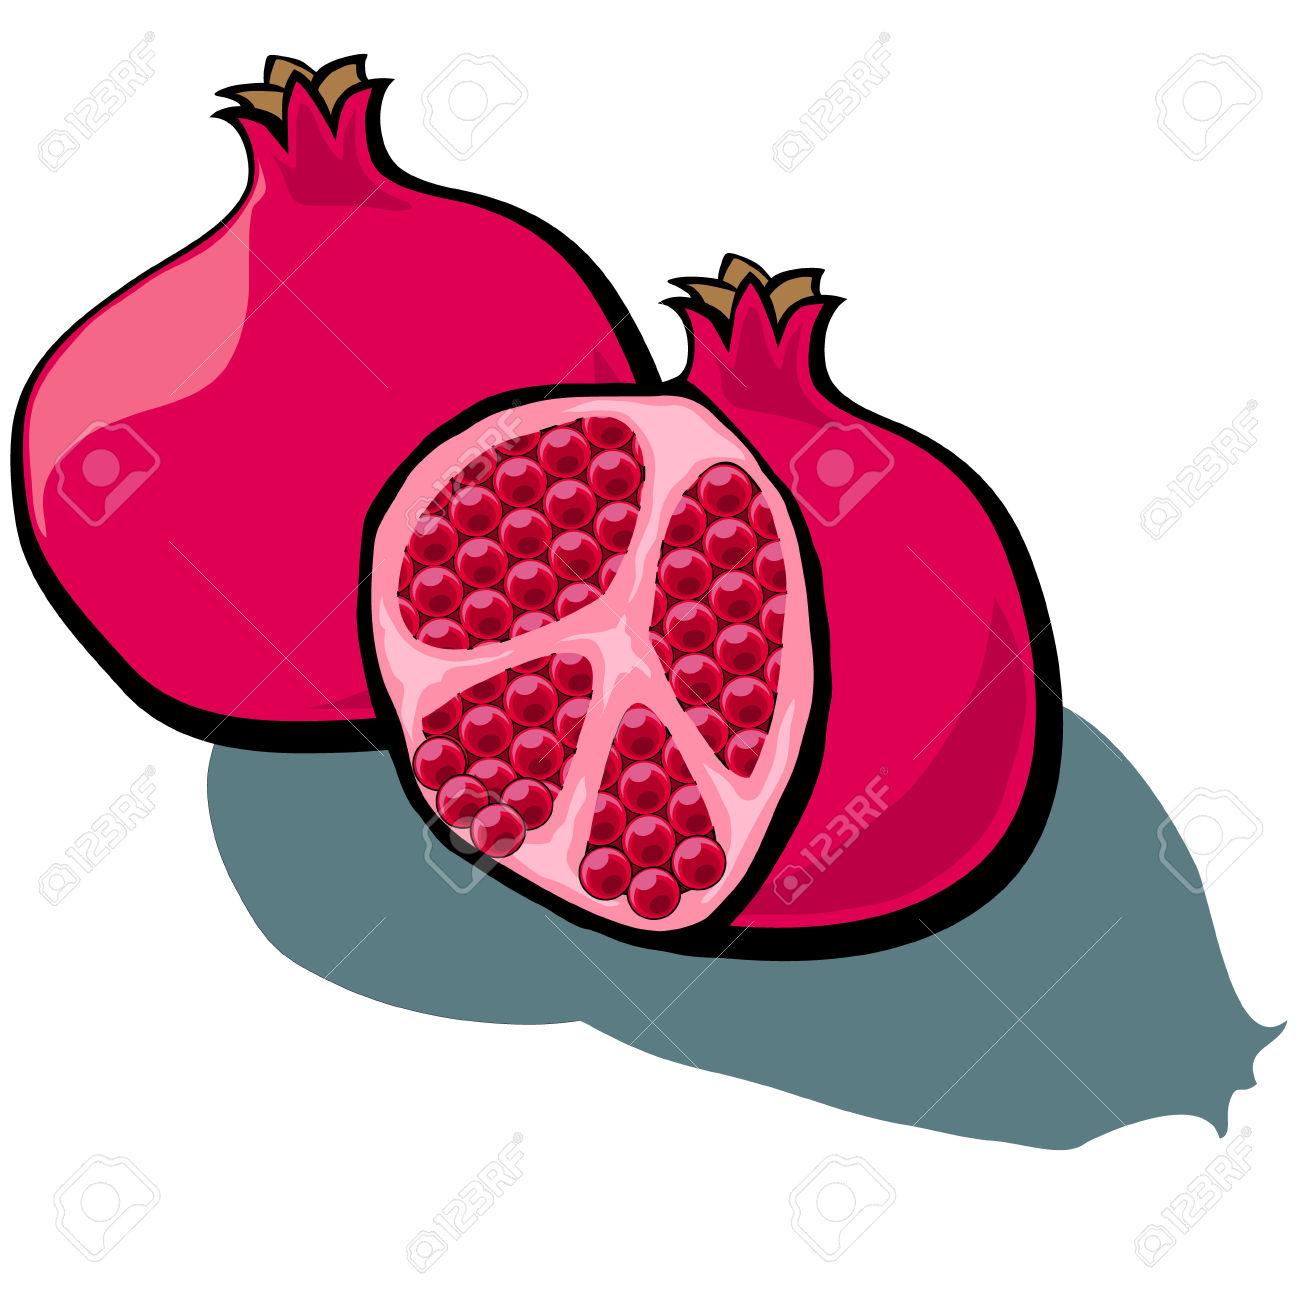 Pomegranate clipart free.